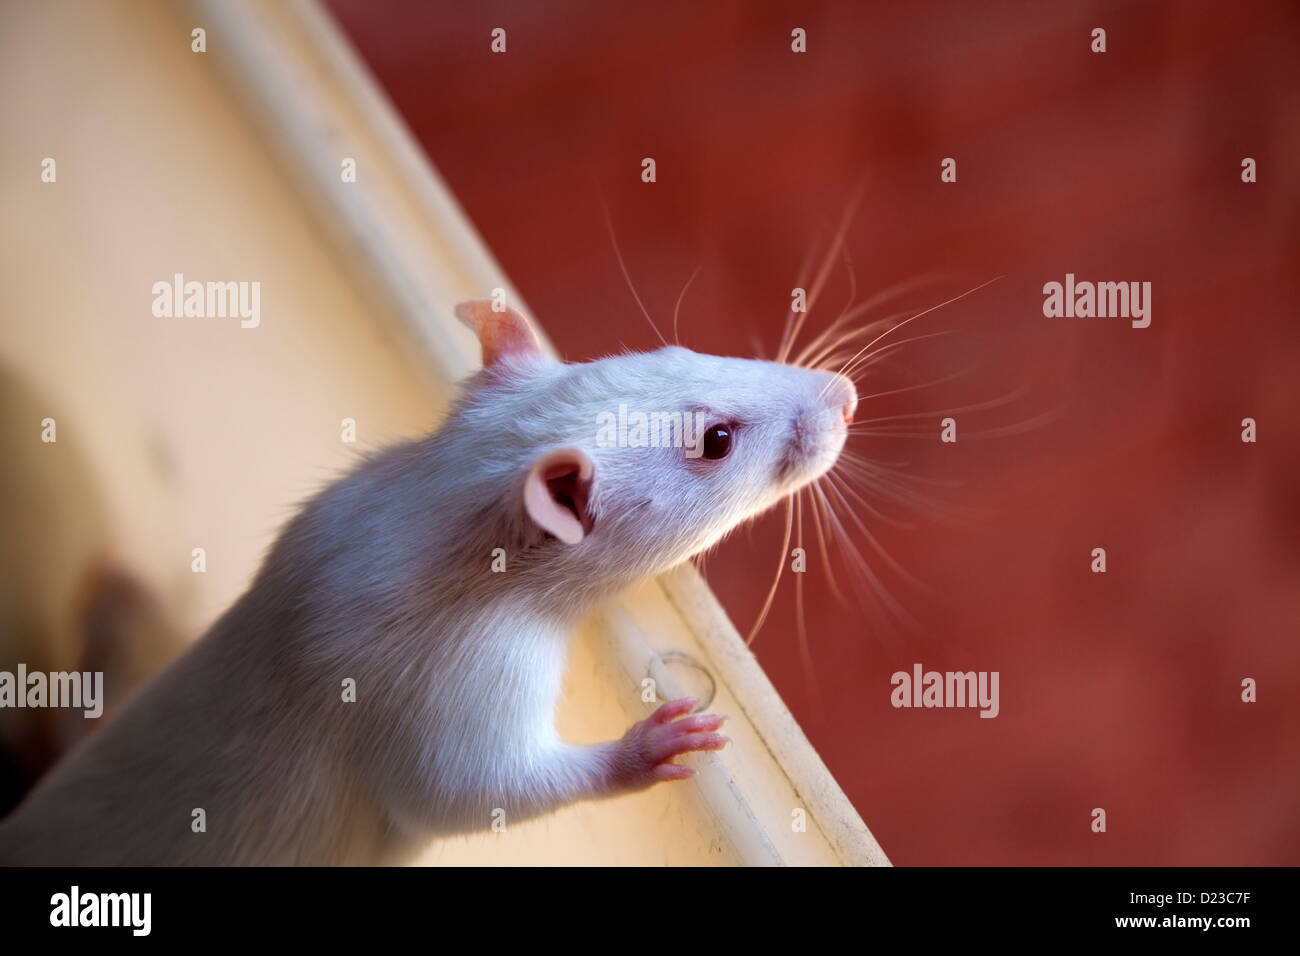 Rat, Laboratory, Mammal, Mite, white rat, Medical Use, Dissection, Rodent, Research, Caucasian, Flea, Scientific Experiment Stock Photo